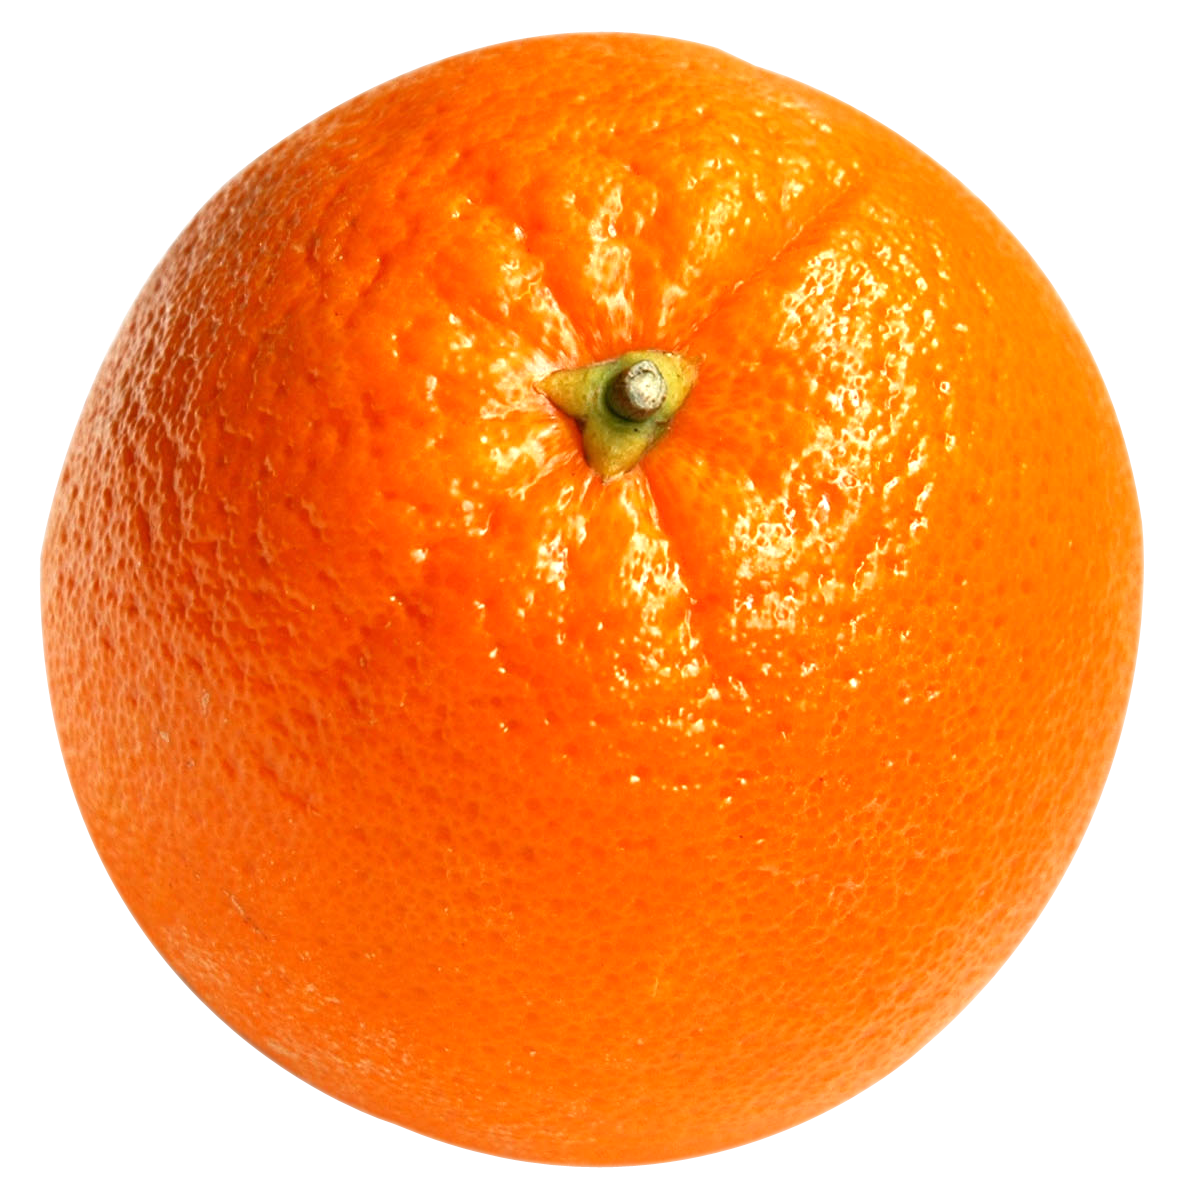 Orange Fruit Png Image - Orange, Transparent background PNG HD thumbnail